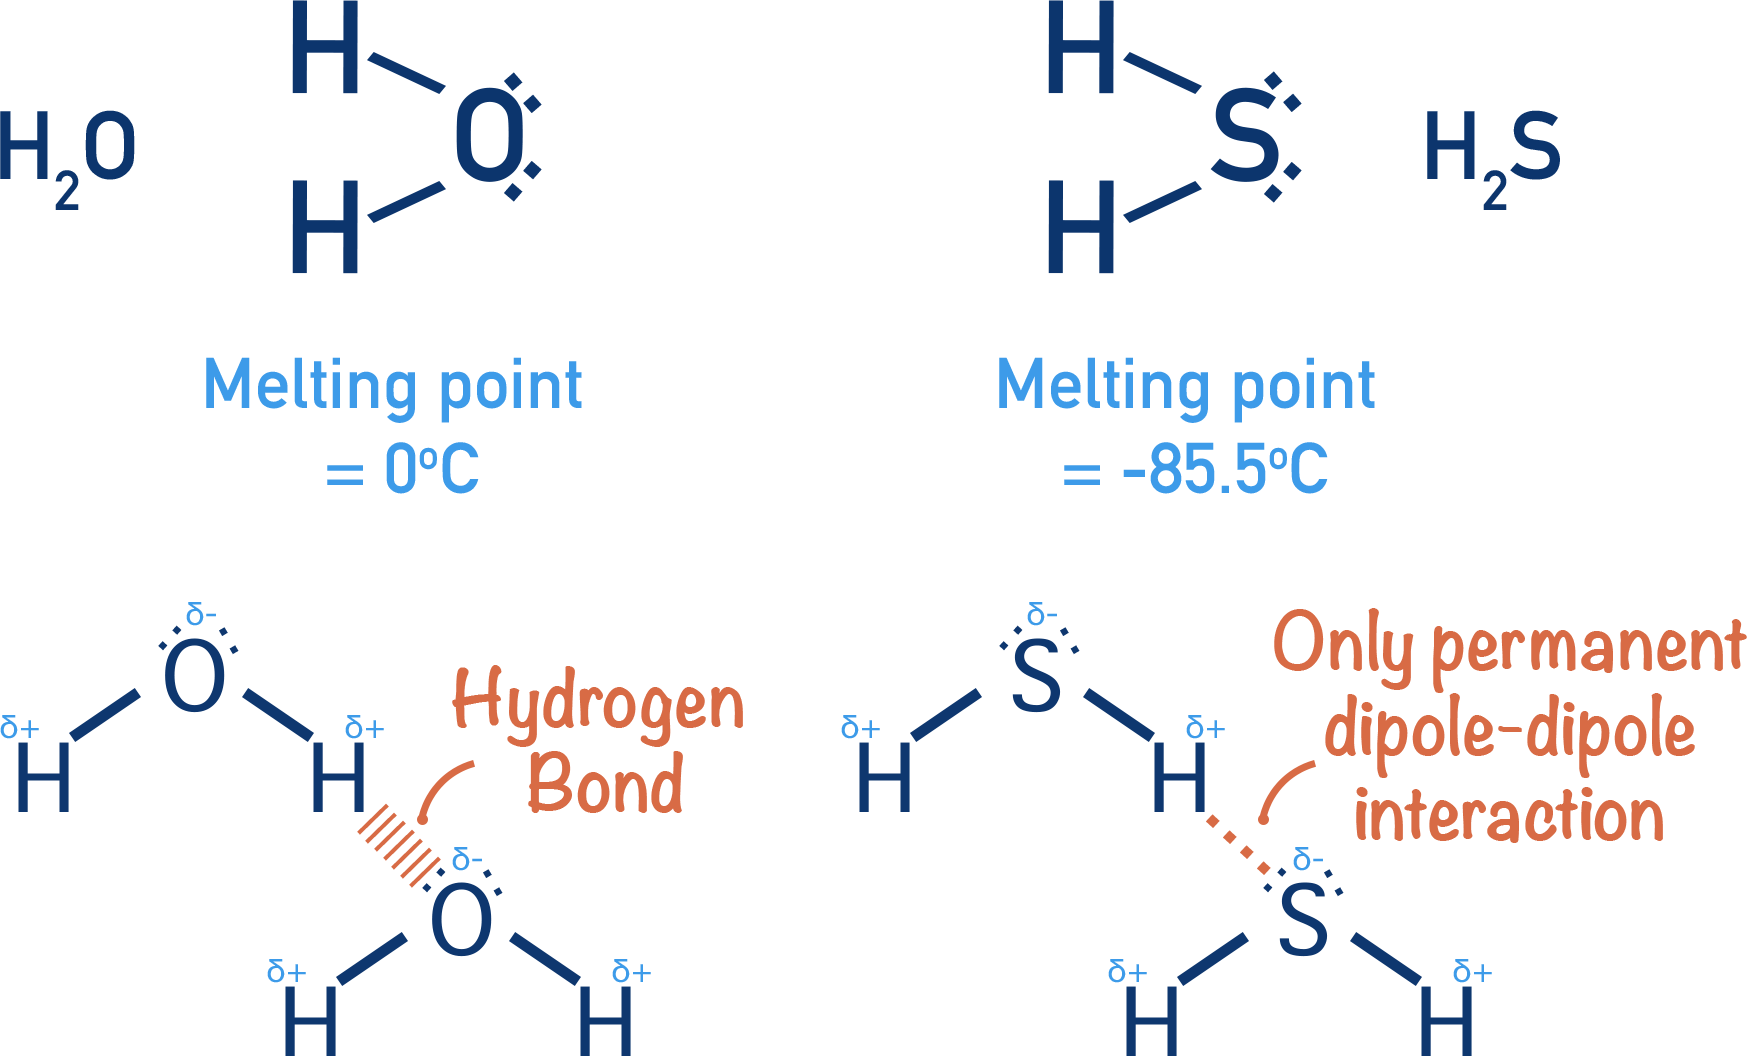 melting point water hydrogen sulfide hydrogen bonding permanent dipole